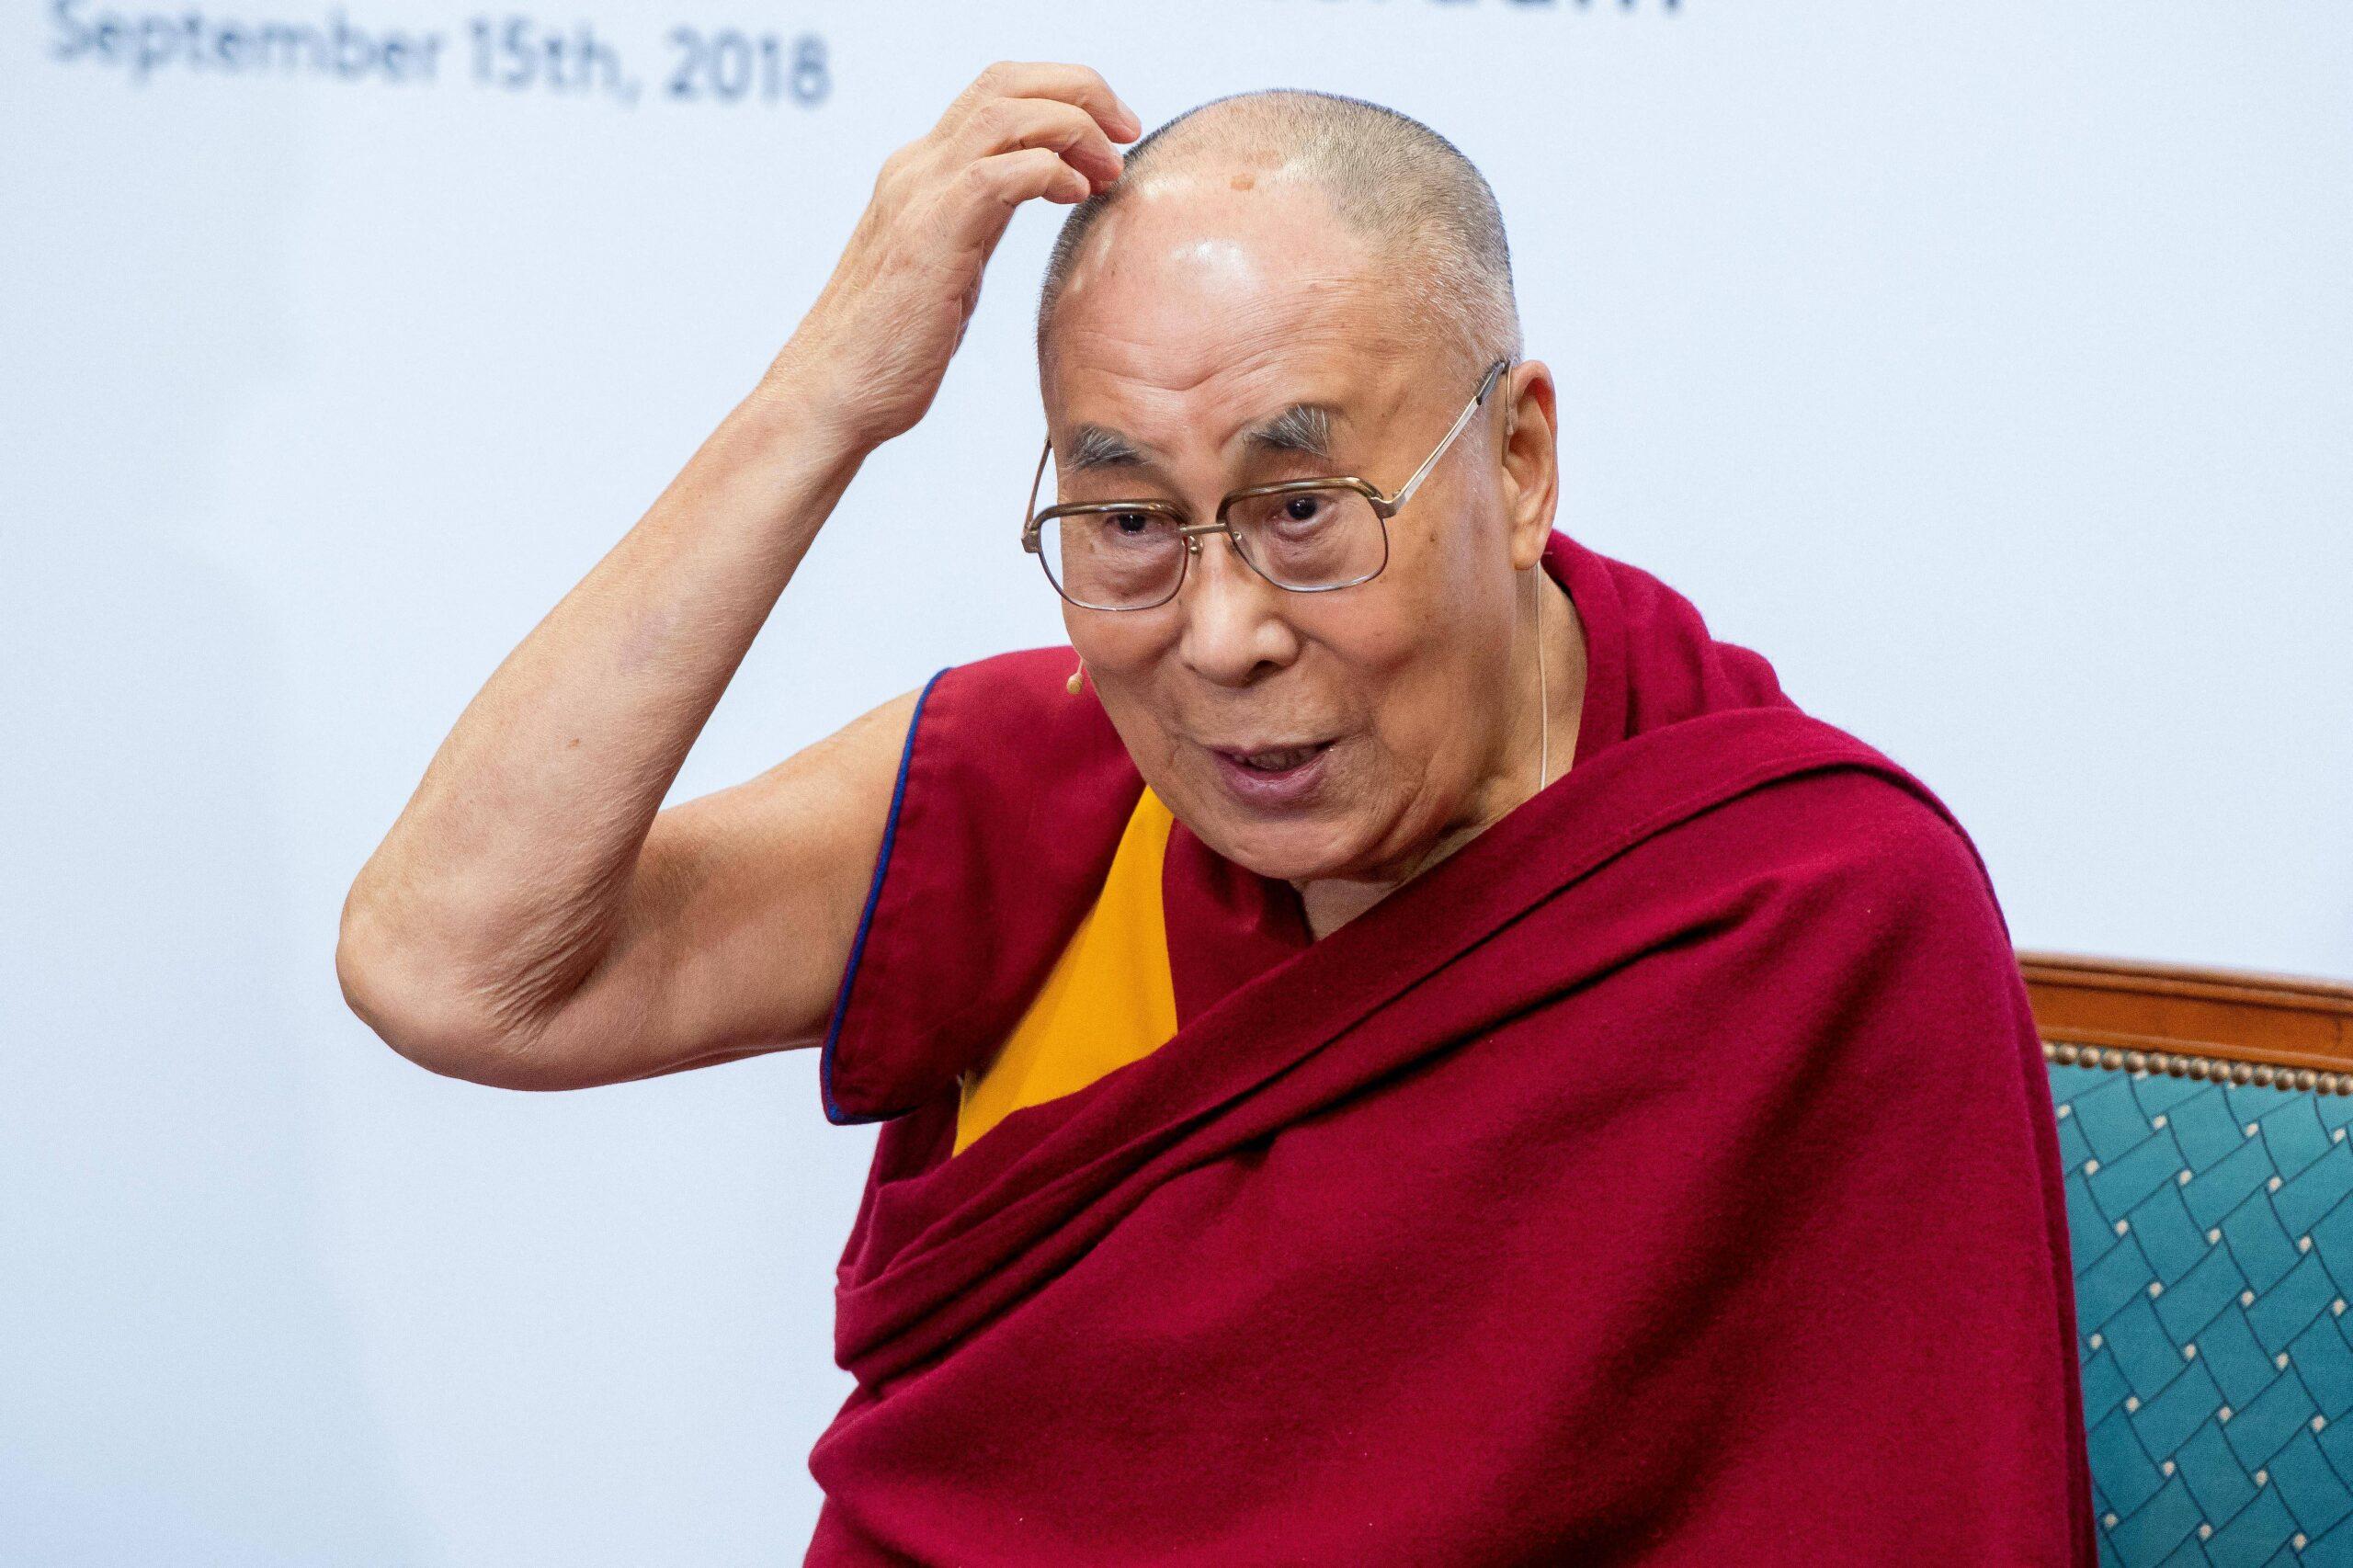 Dalai Lama Controversy Worsens As Resurfaced Clip Shows Him Touching Singer Lady Gaga's Leg